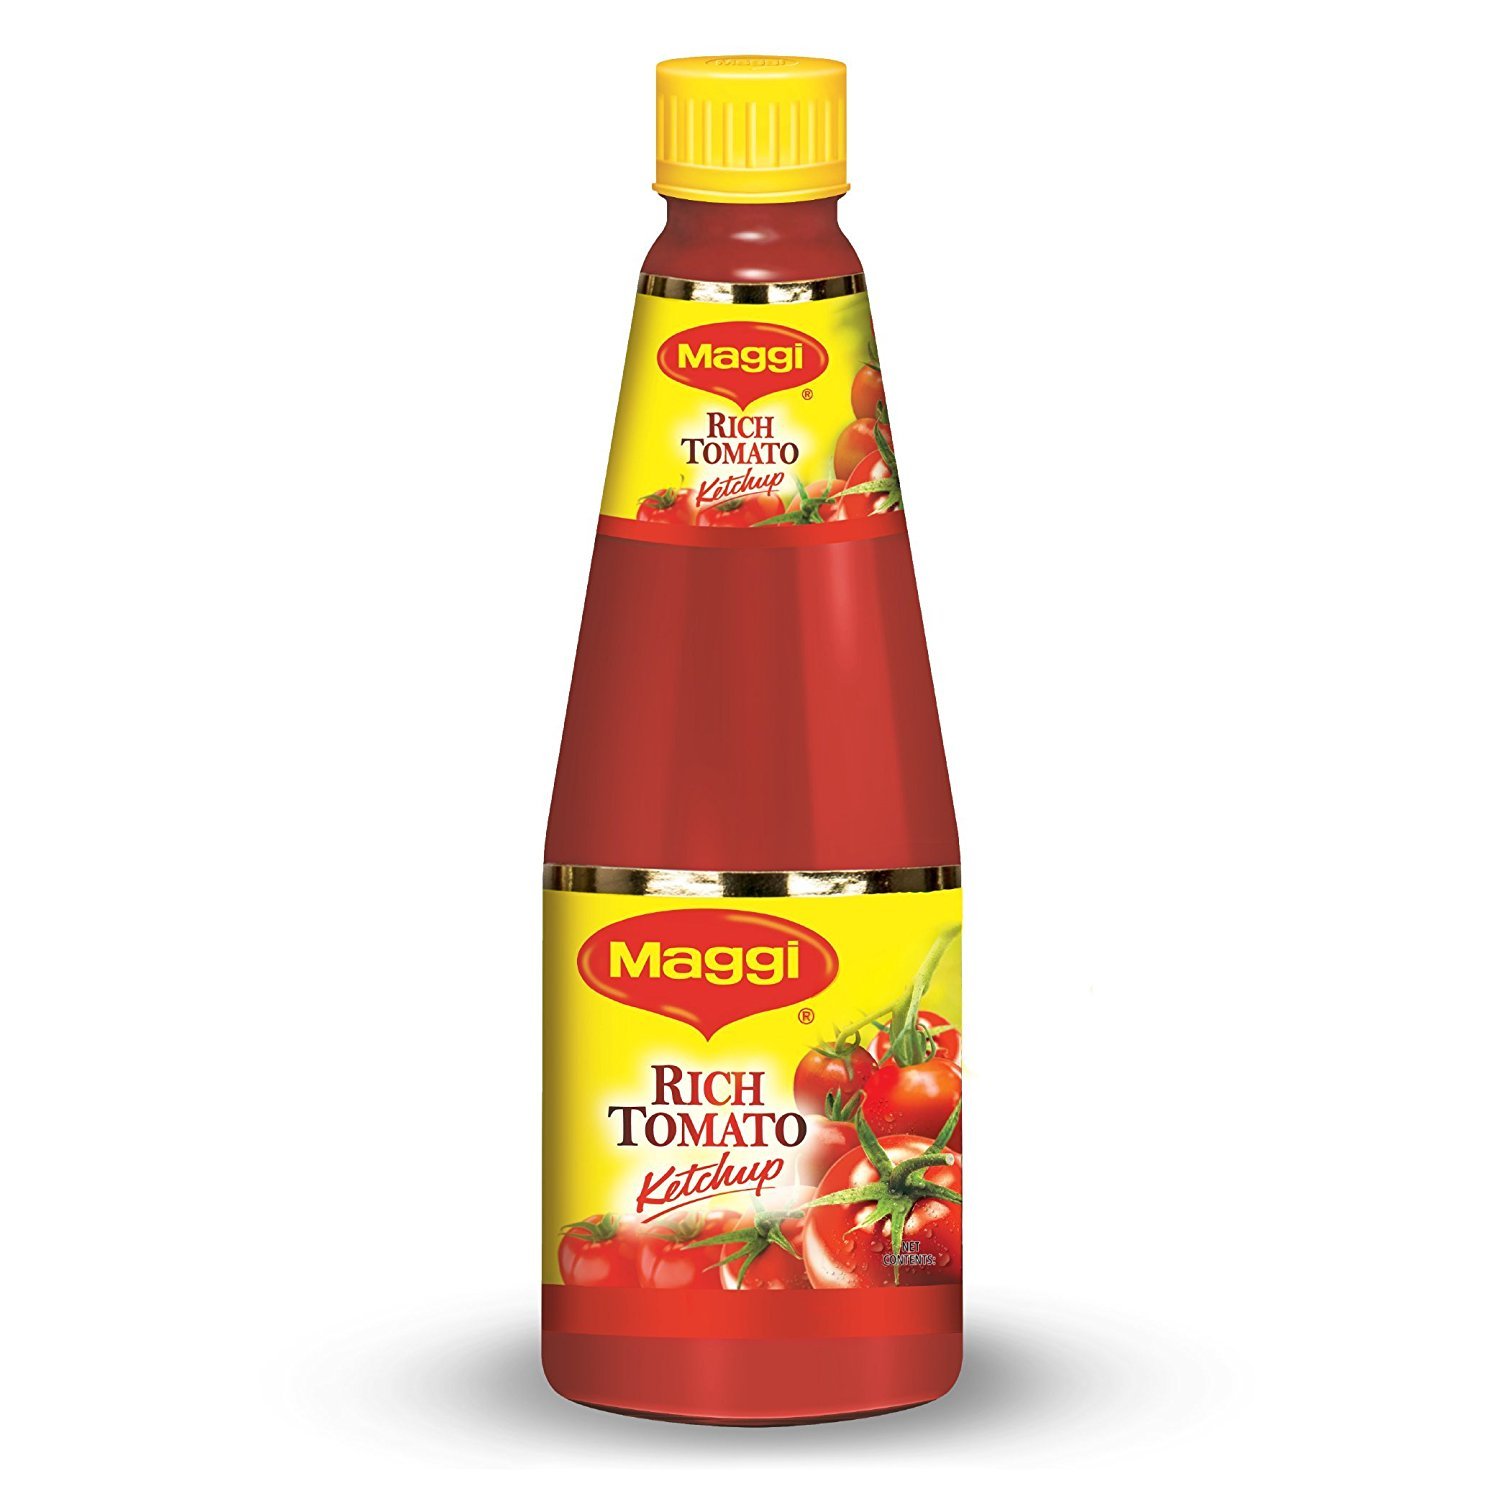 (Maggie) Tomato ketchup 500g - Click Image to Close